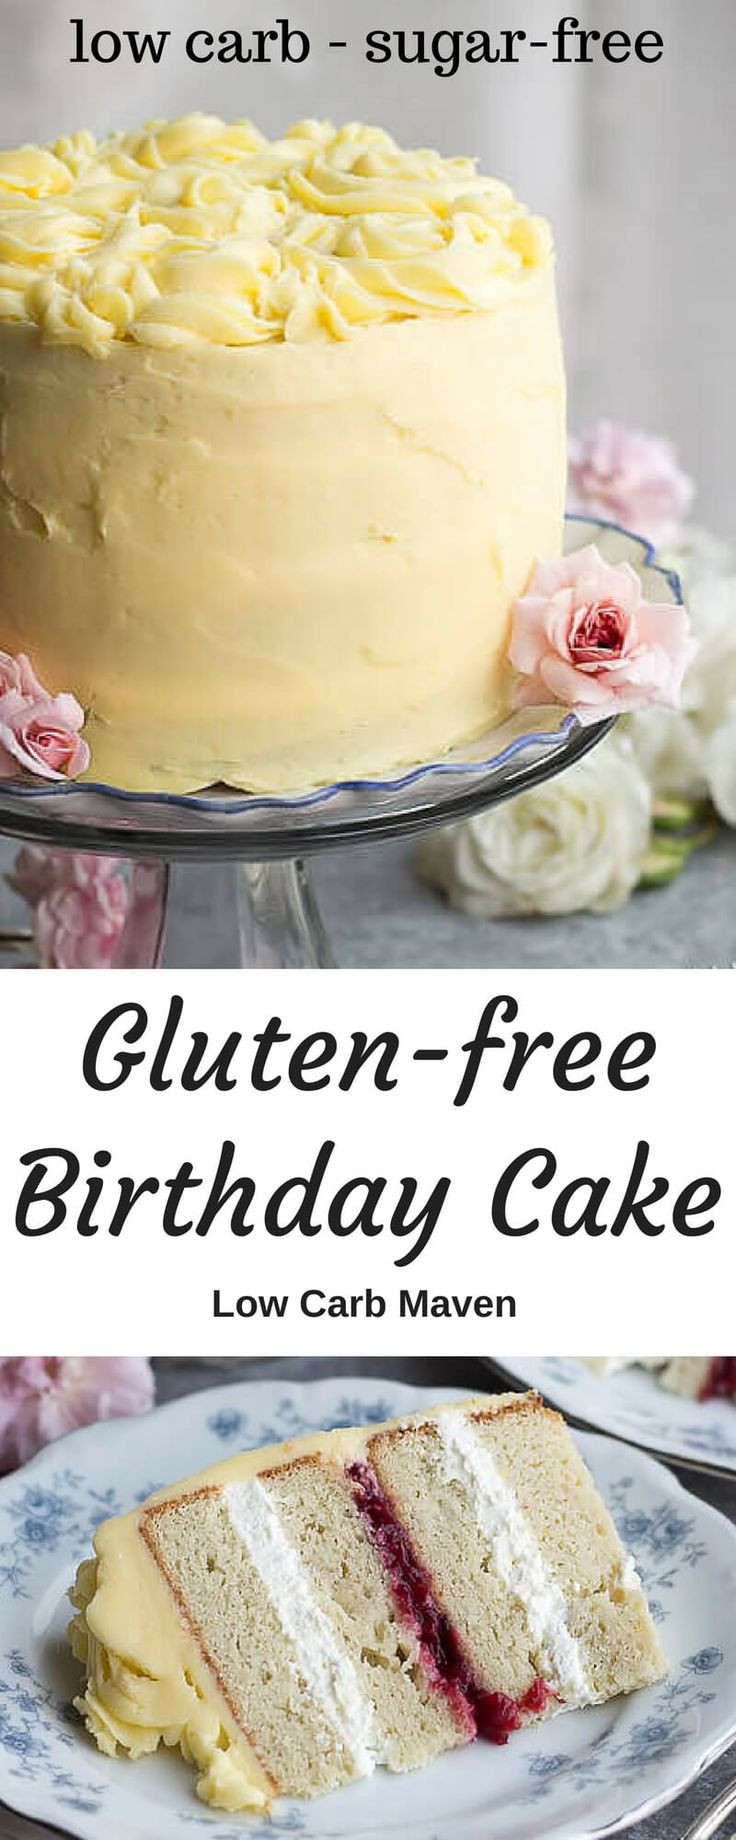 Diabetic Birthday Cakes Recipes
 The 25 best Diabetic birthday cakes ideas on Pinterest